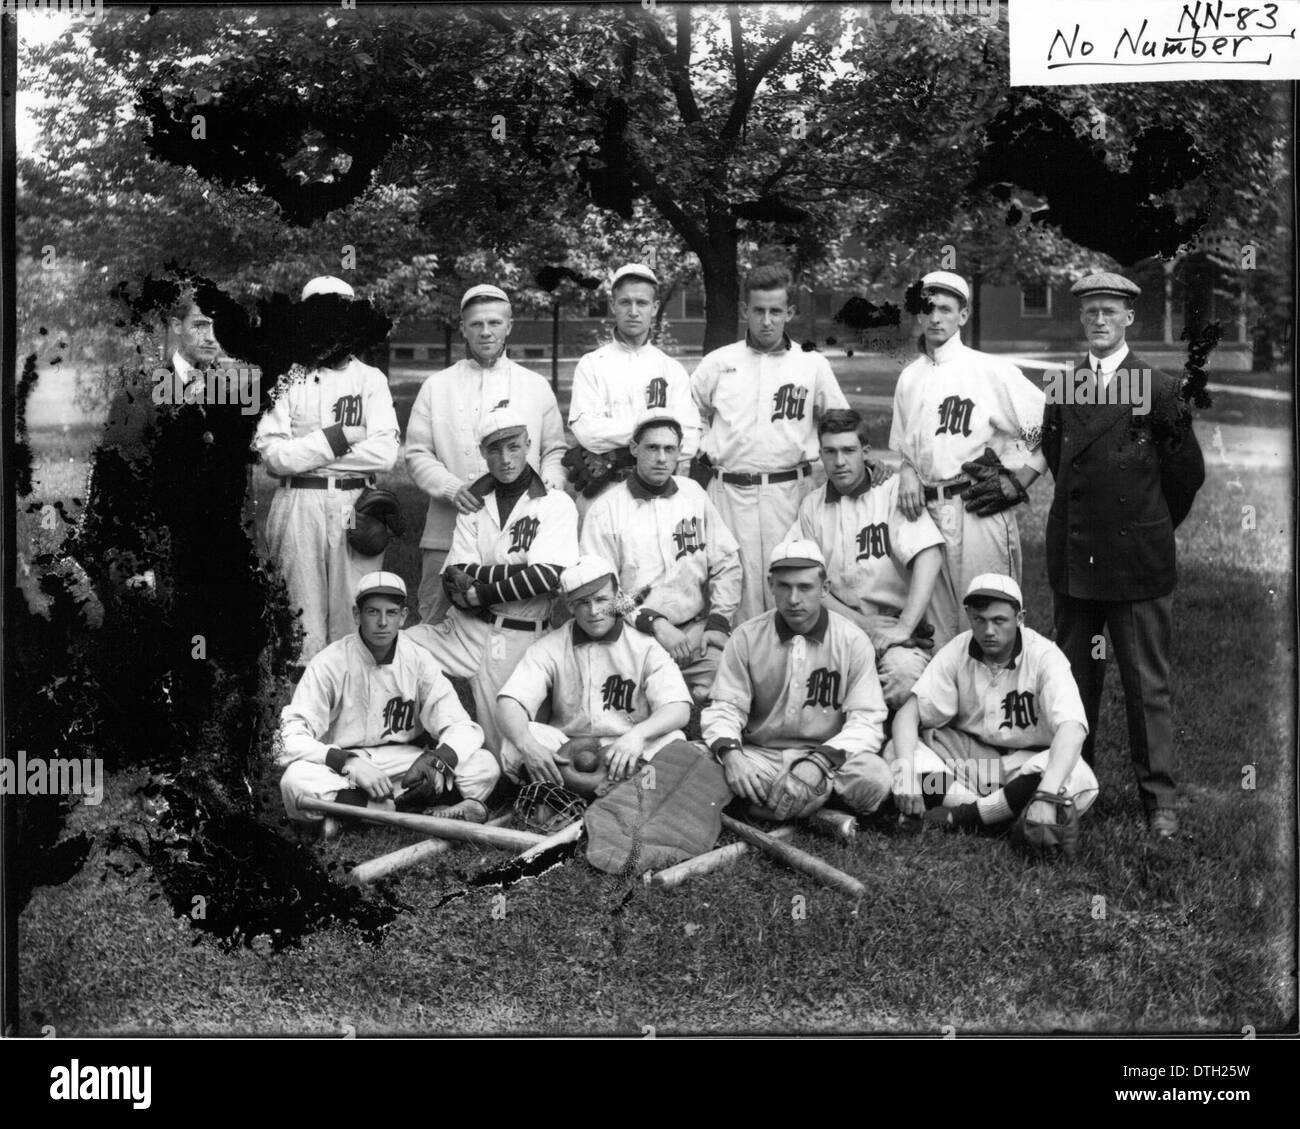 Miami University baseball team in 1908 Stock Photo Alamy